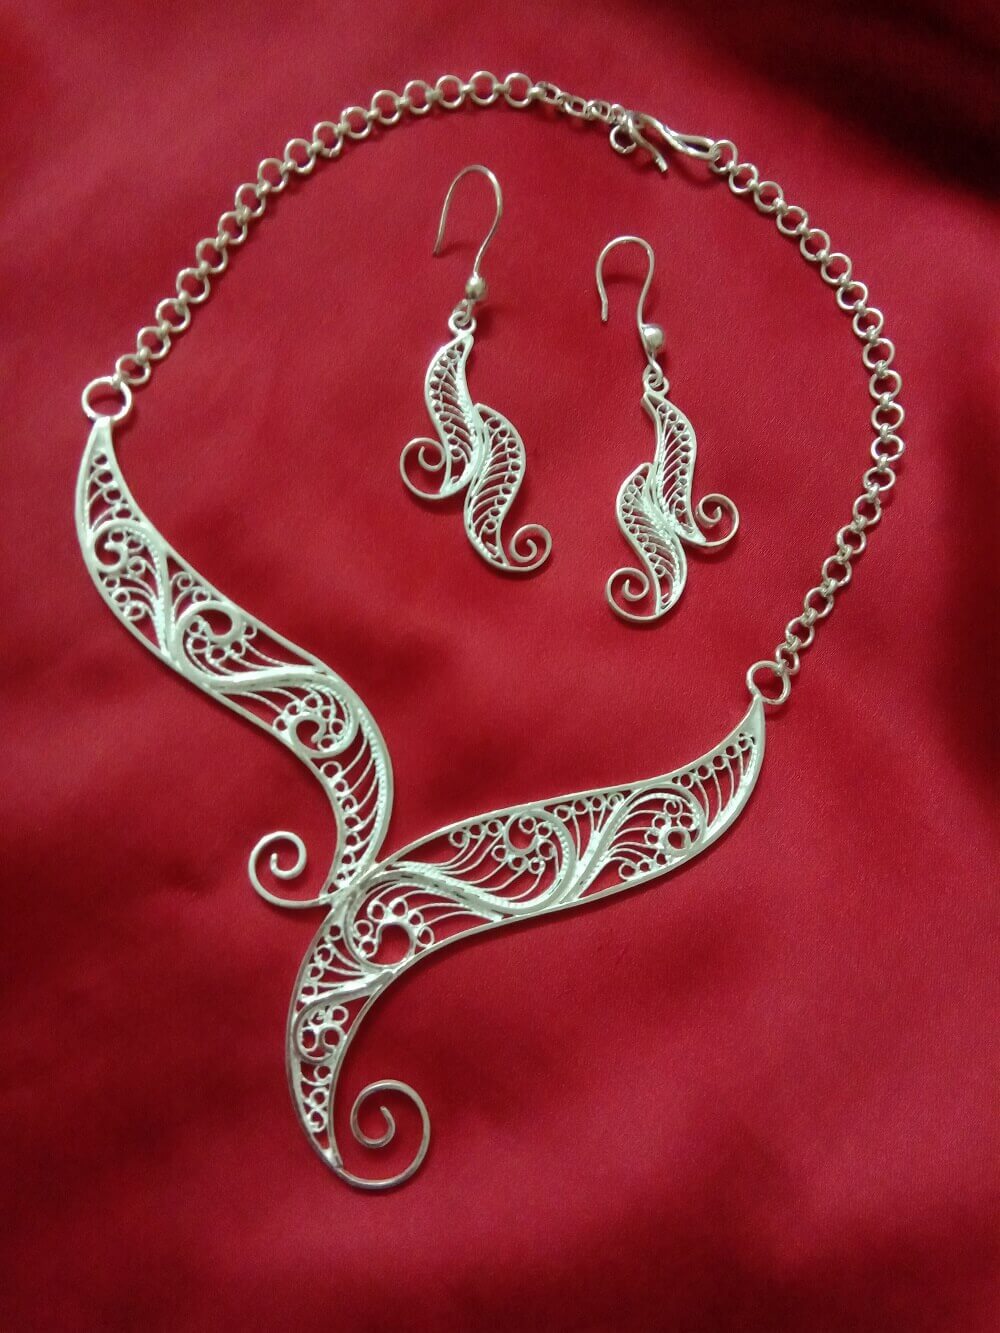 Silver Choker Necklace